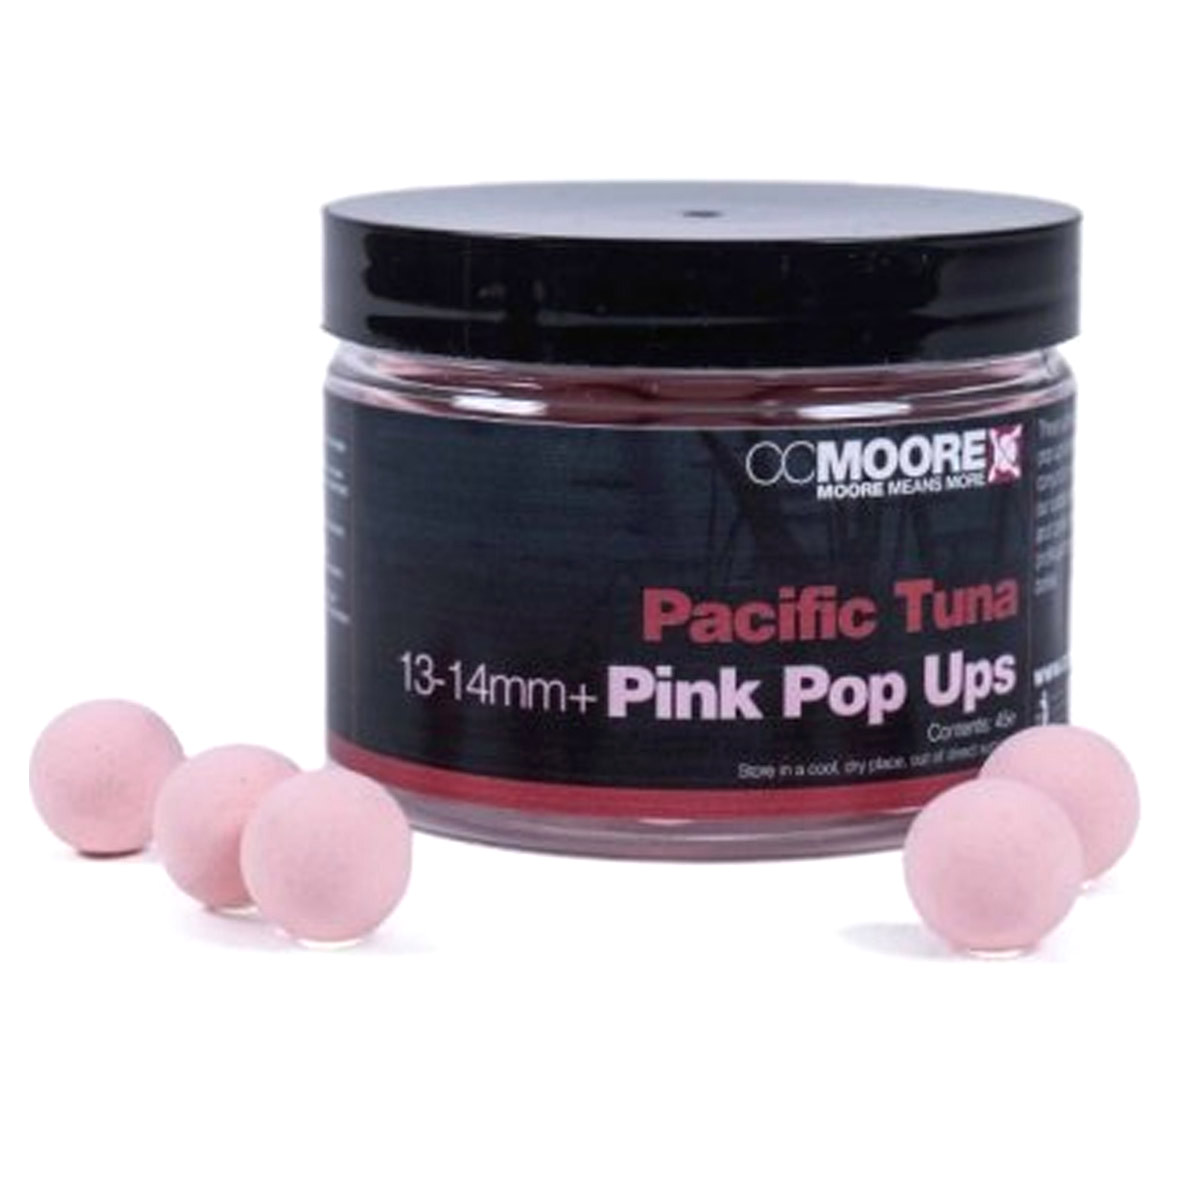 Cc moore Pacific Tuna Pink Pop Ups 13-14mm